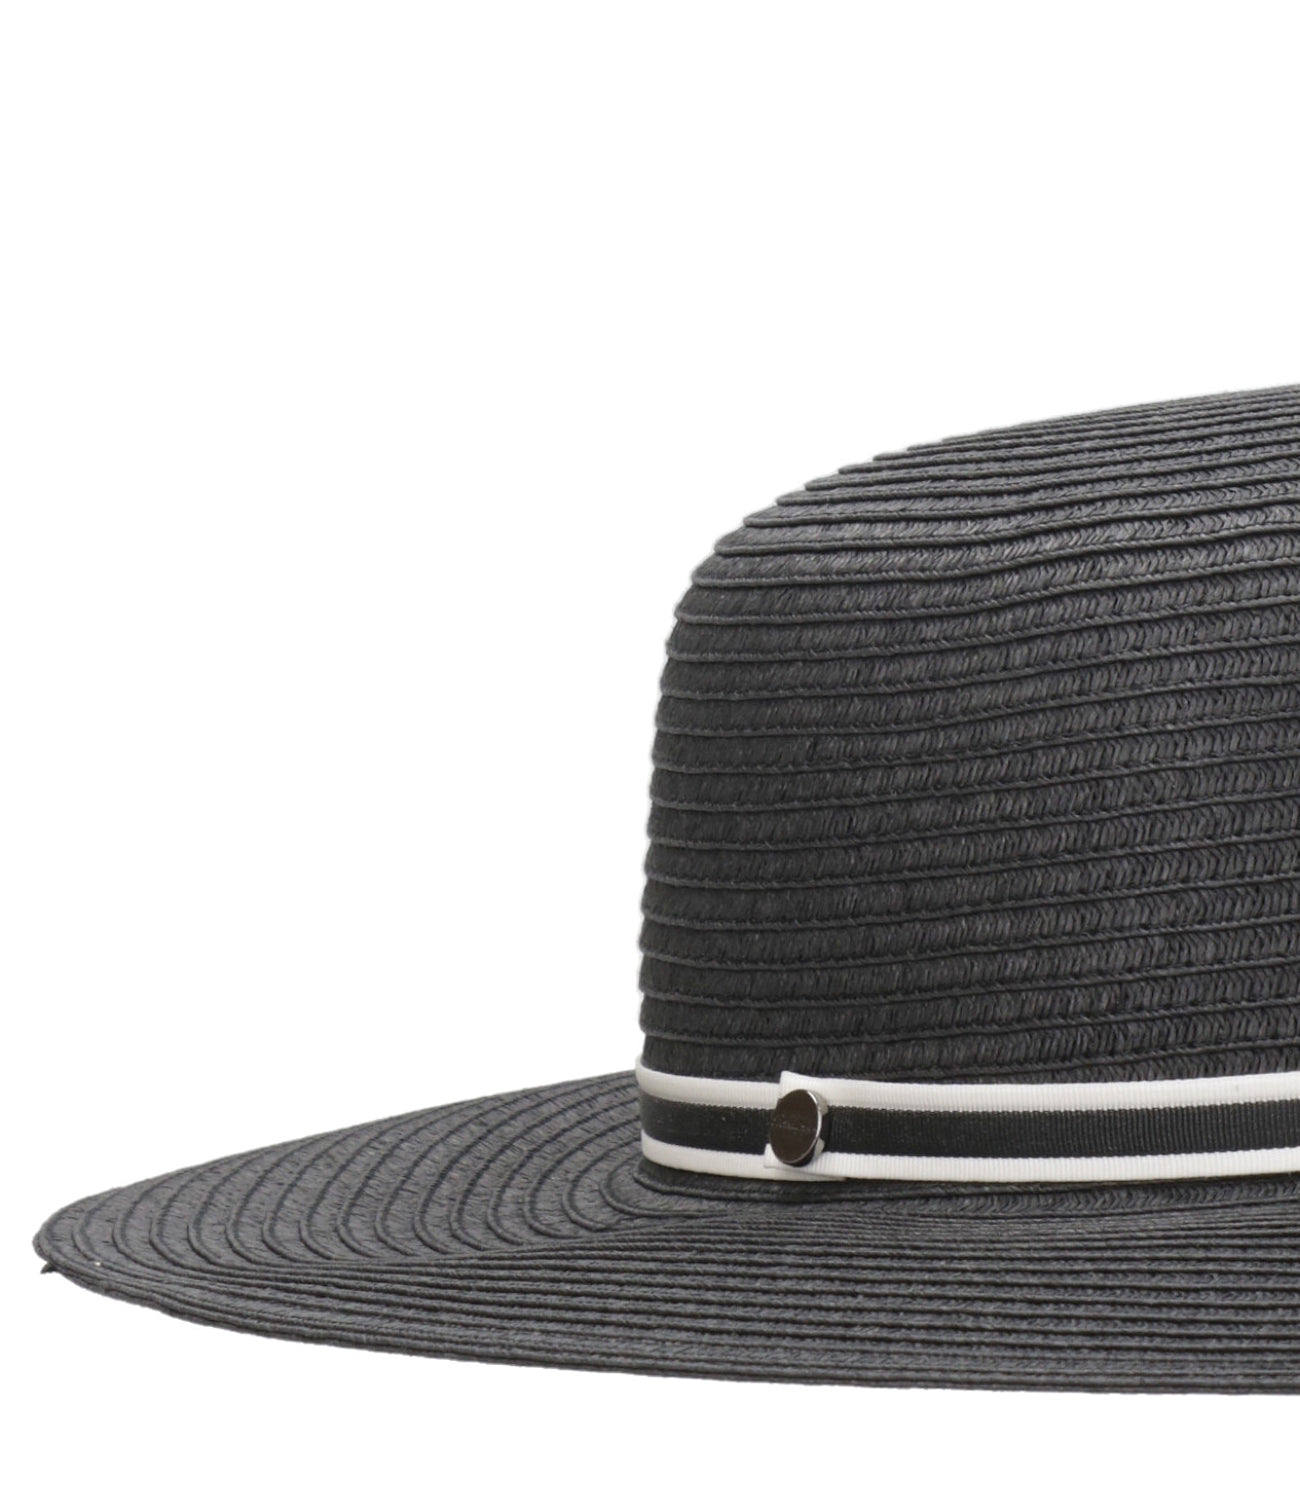 Borsalino | Black Hat